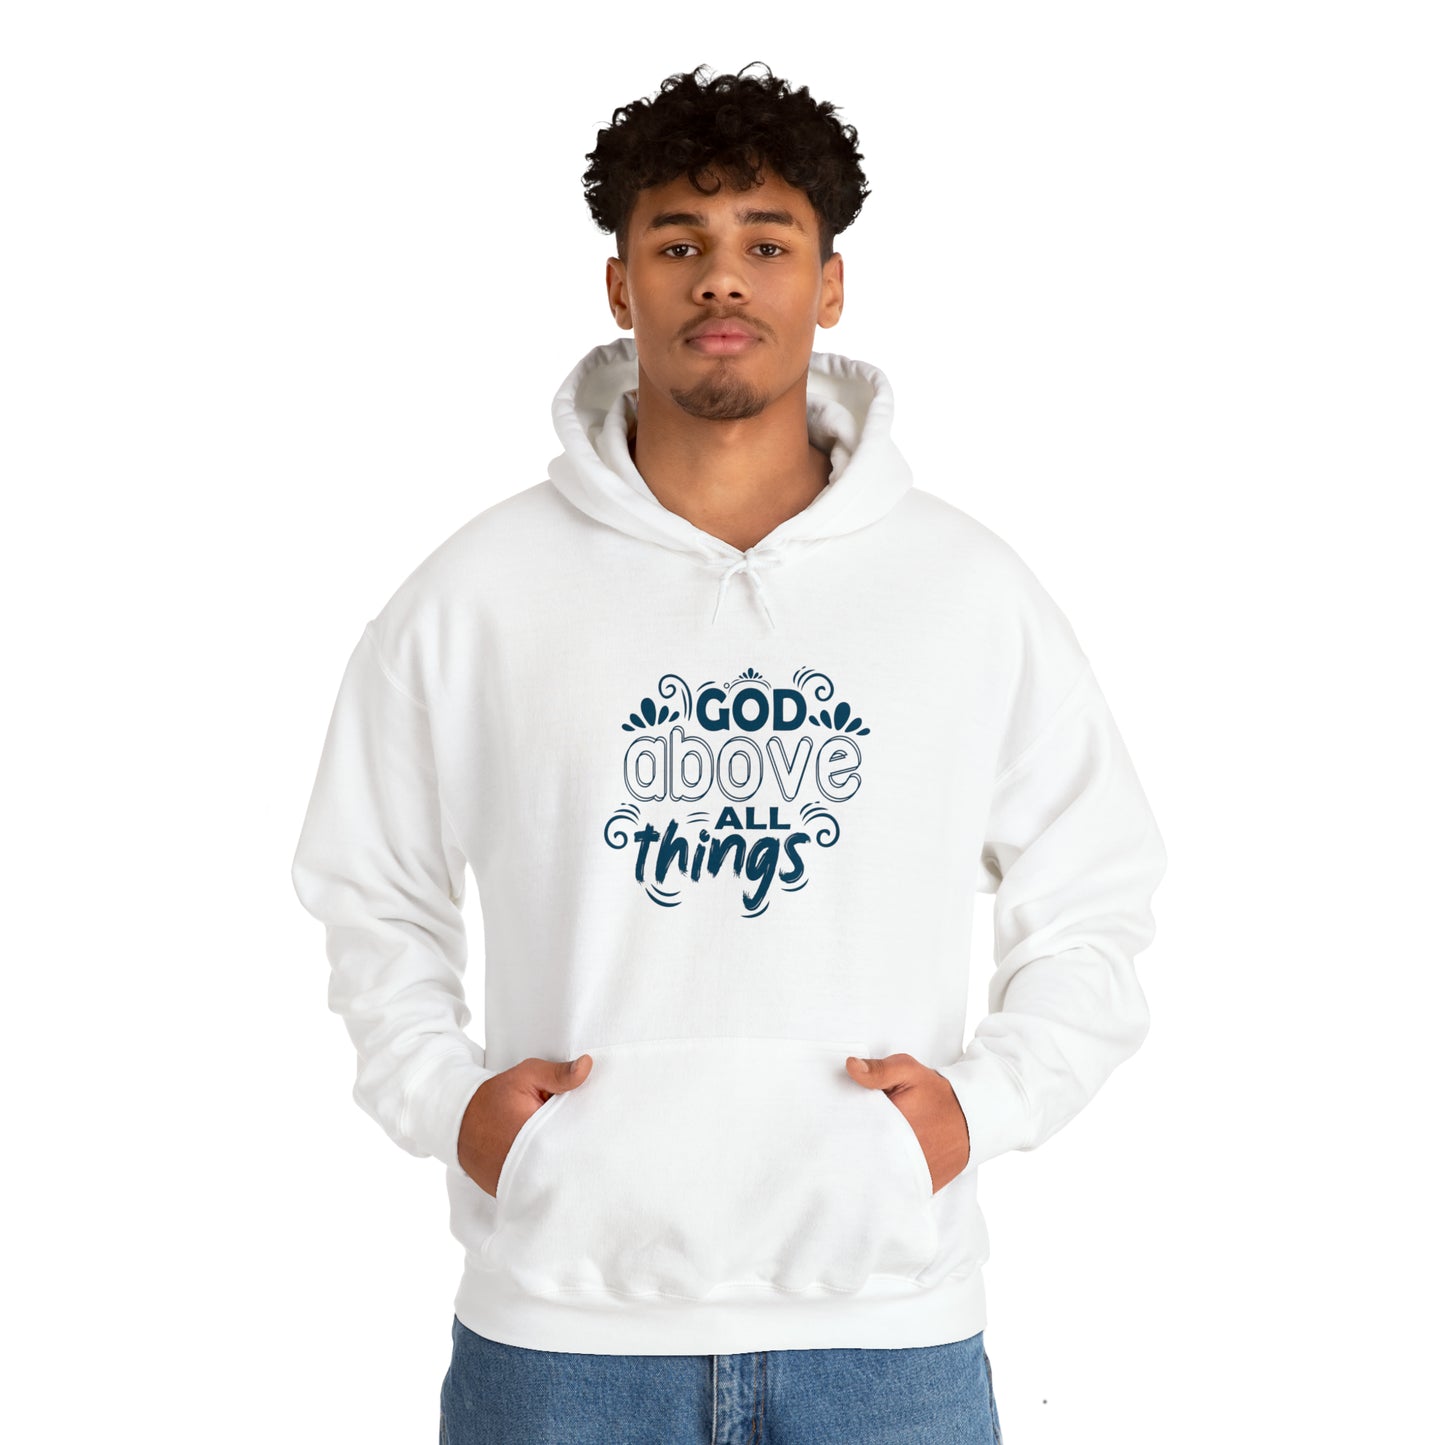 God Above All Things Unisex Hooded Sweatshirt